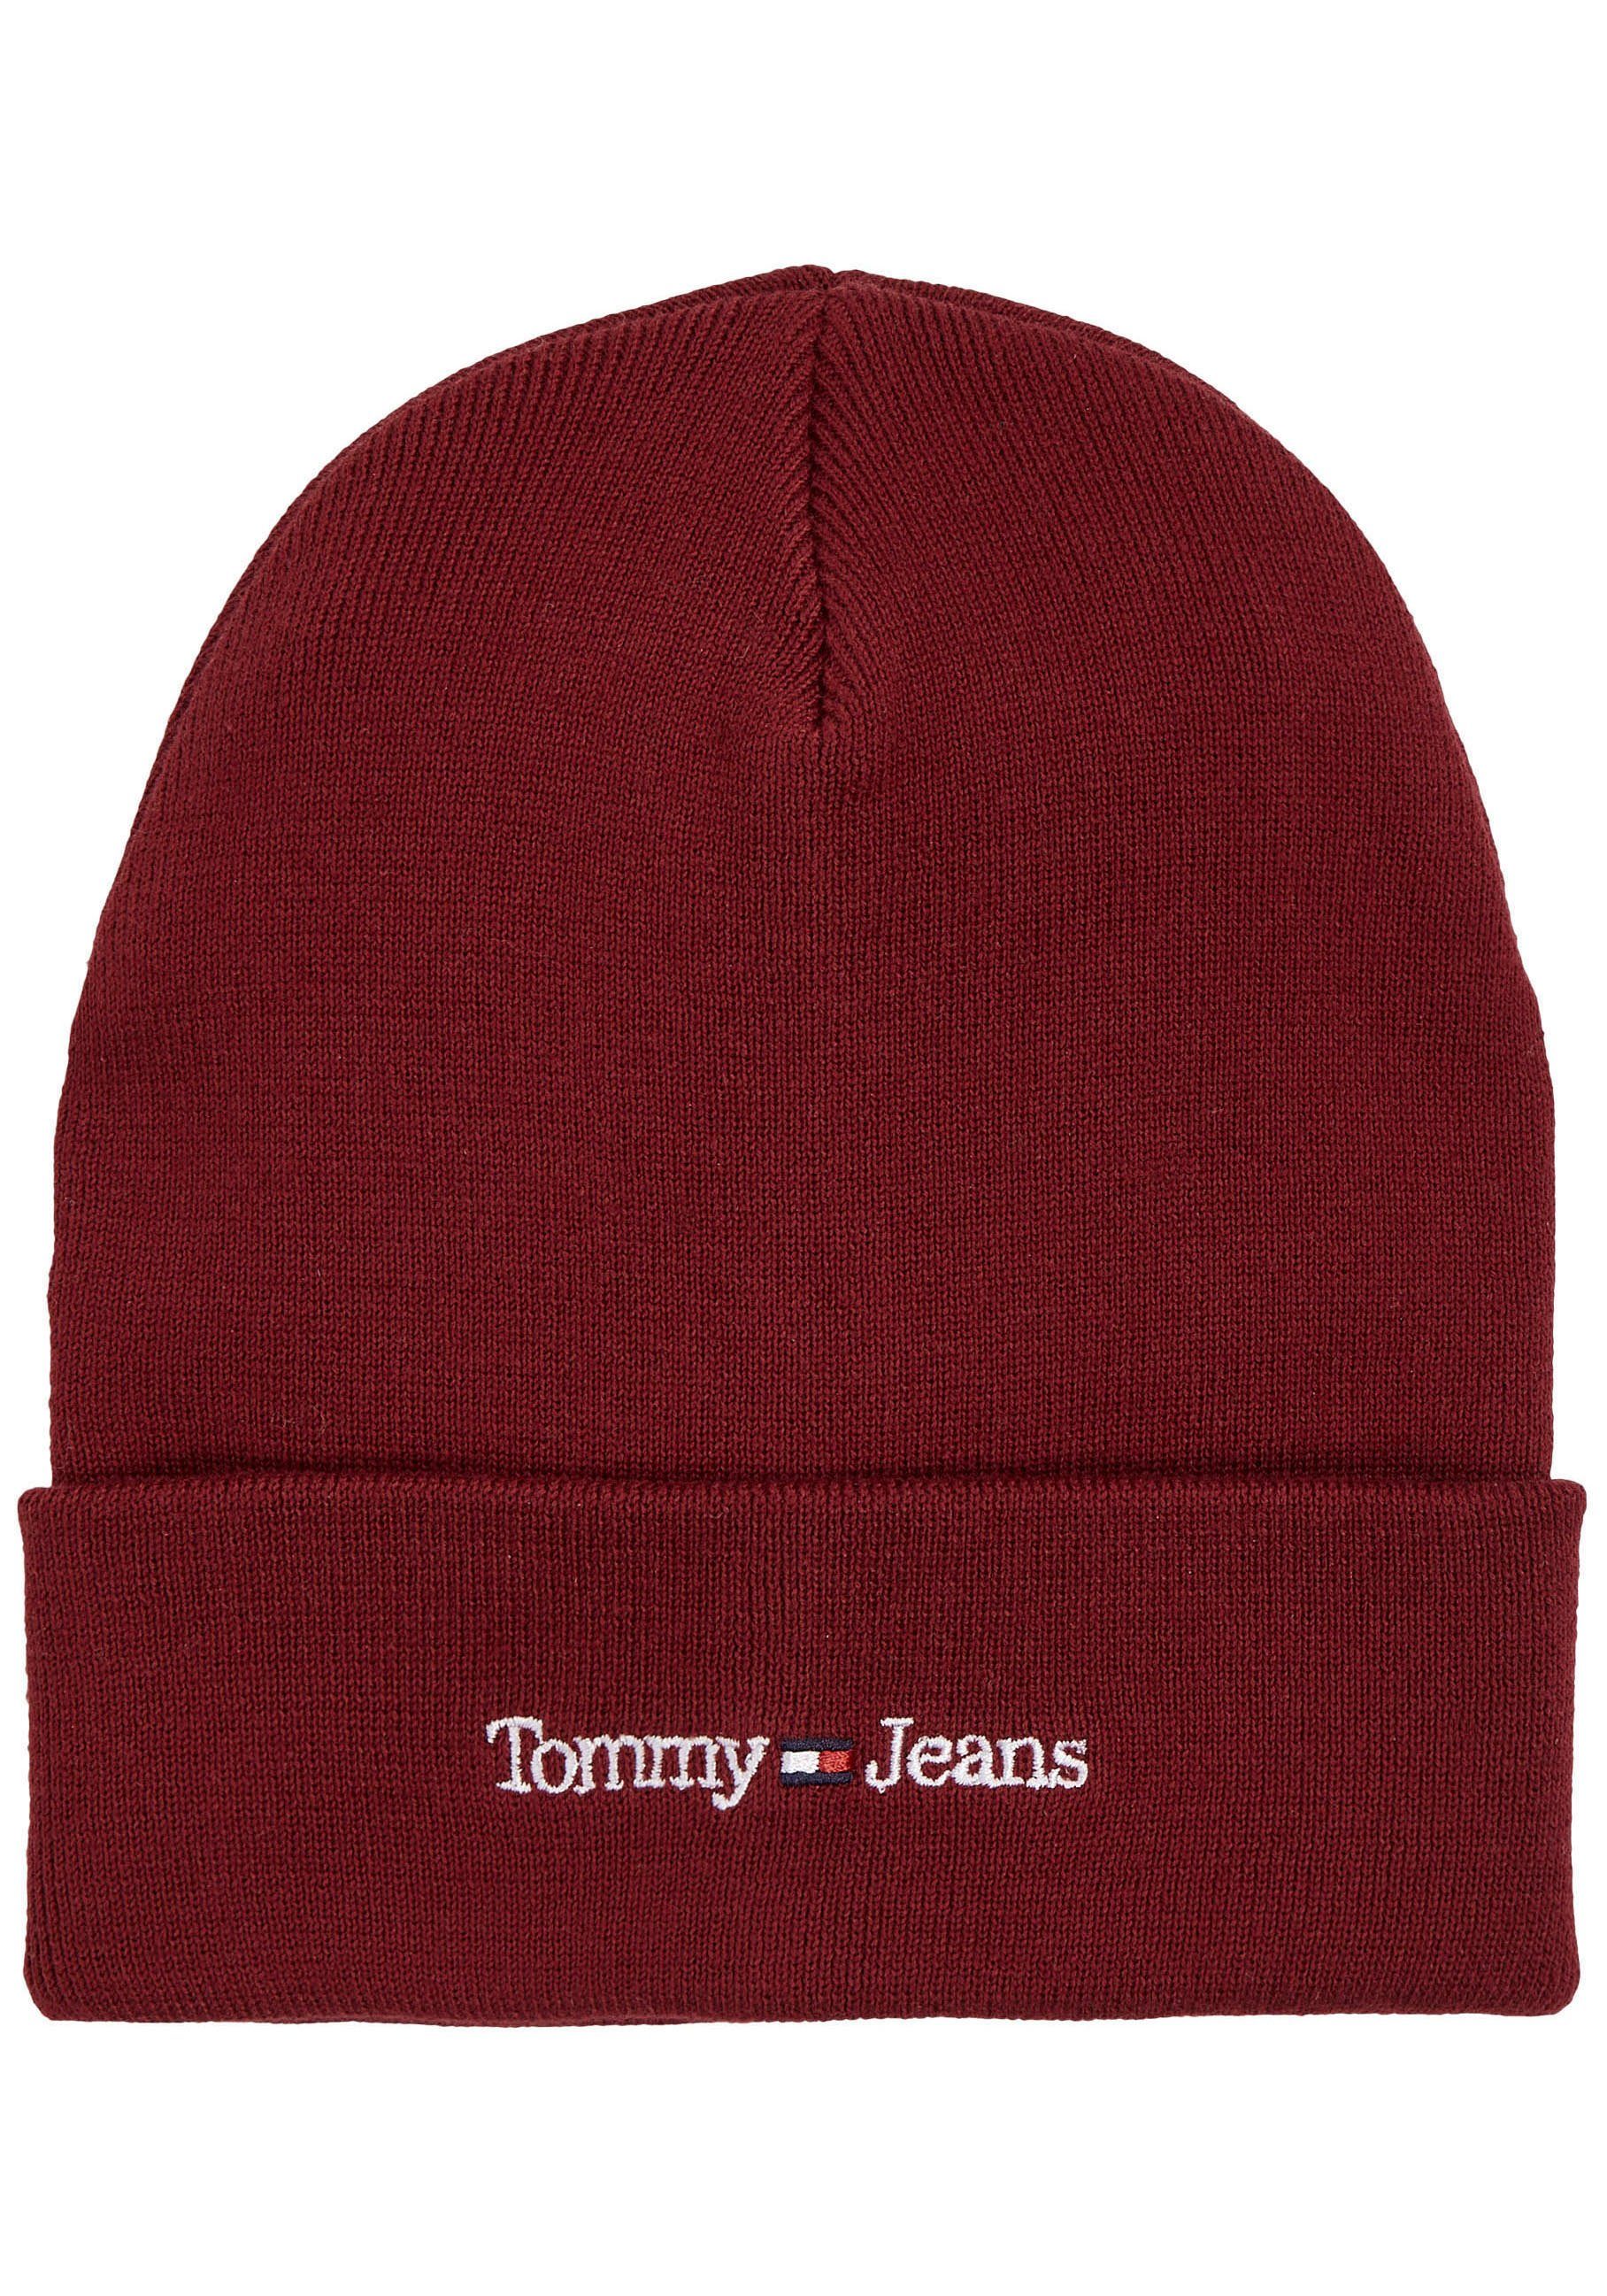 Tommy Jeans Beanie TJM SPORT BEANIE Rouge | Sommermützen